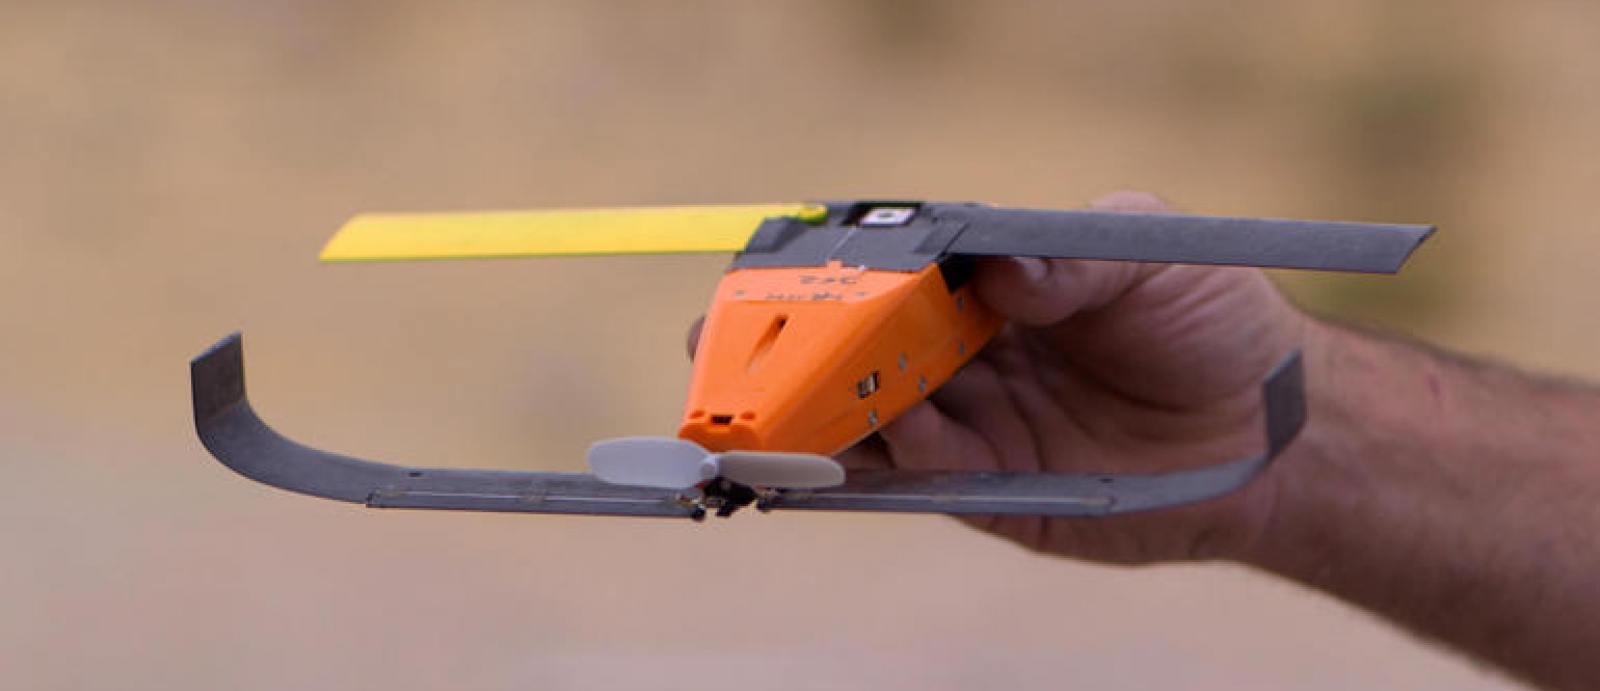 The Perdix drone | CBS News